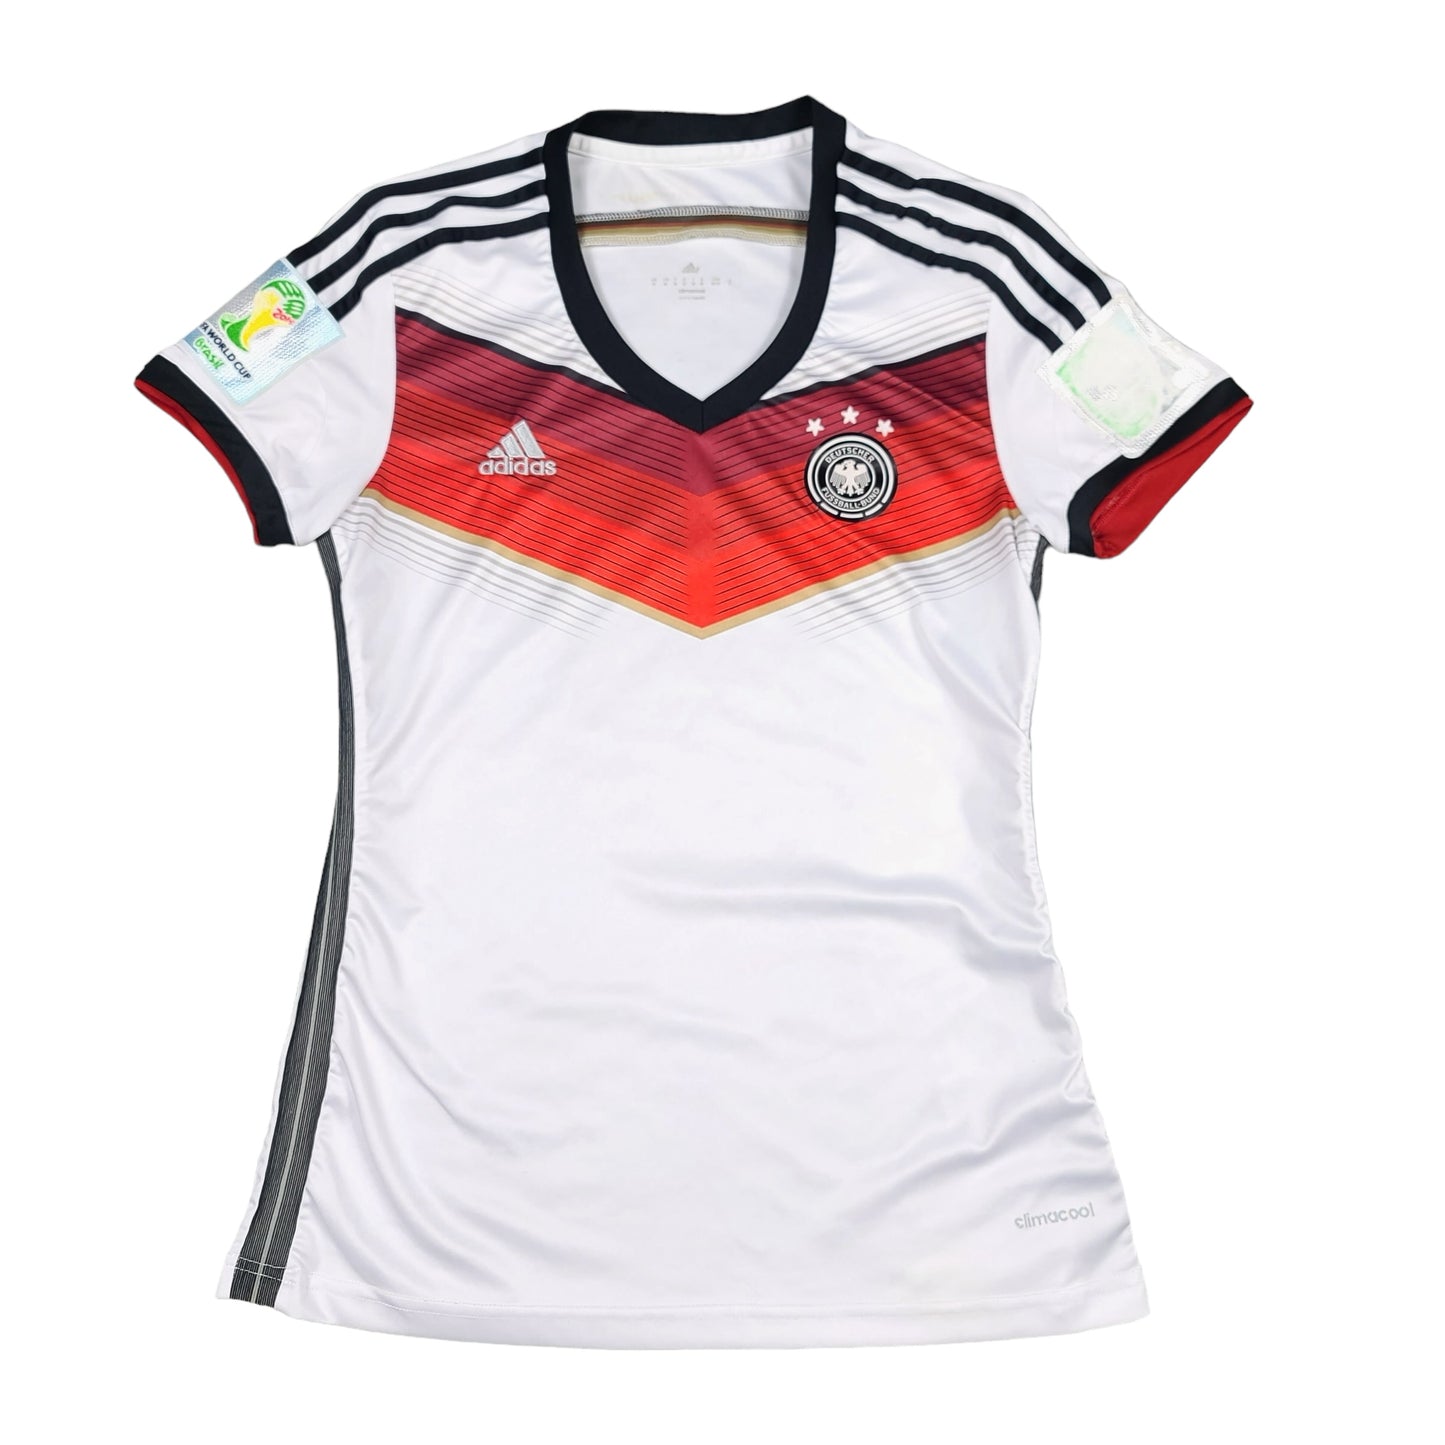 Germany 2014 Home adidas Soccer Jersey (Women's Cut)